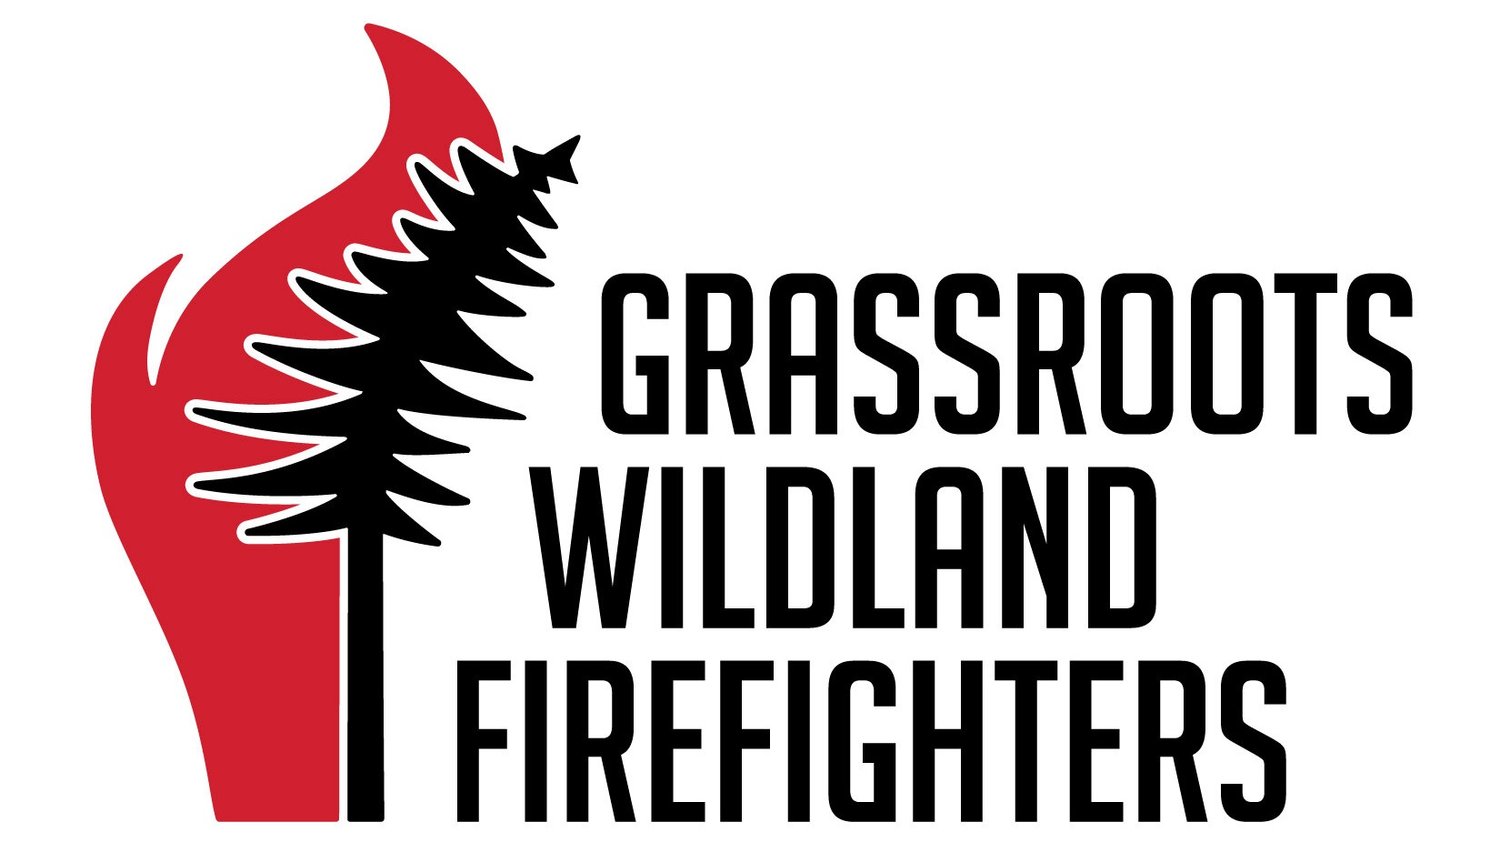 Grassroots Wildland Firefighters